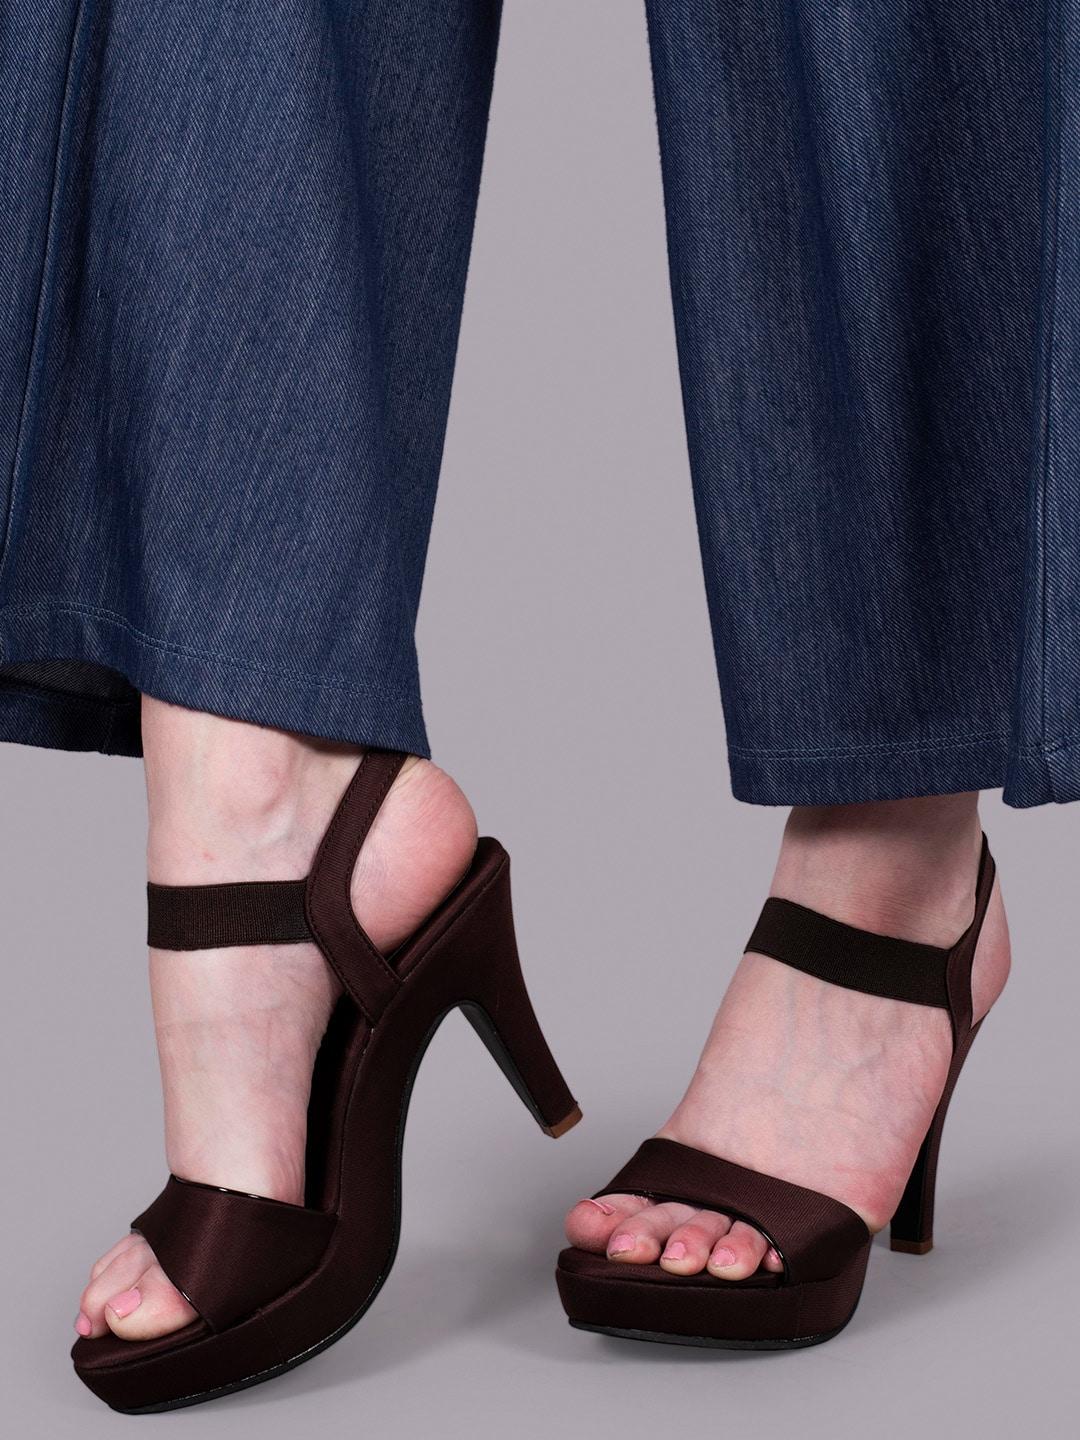 aroom-open-toe-platform-heels-with-backstrap